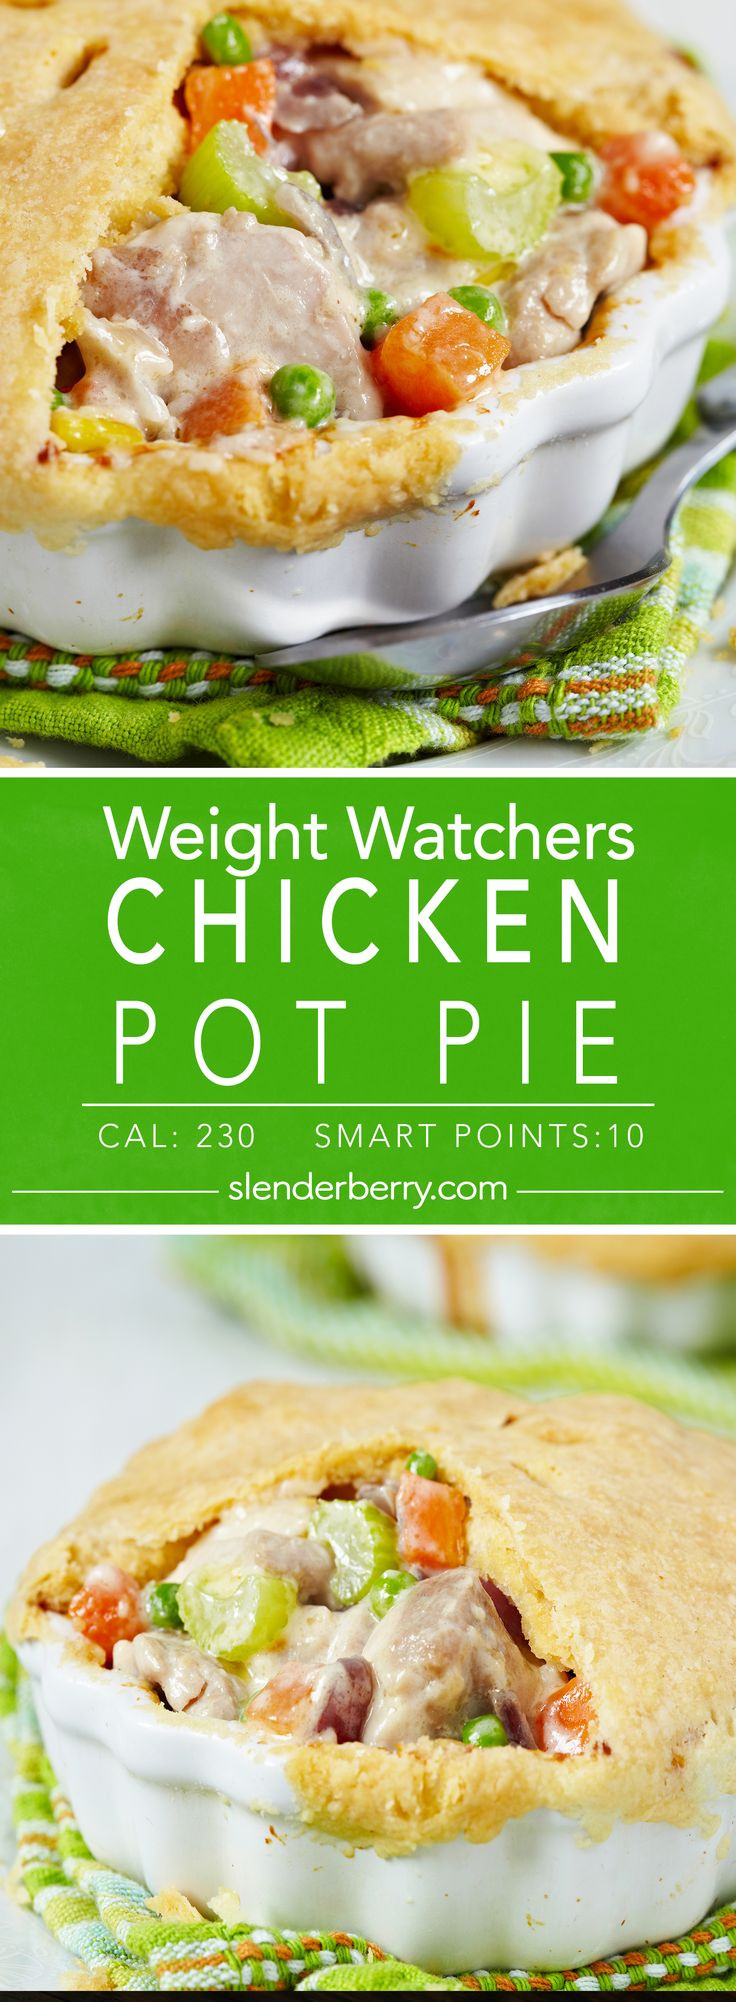 Healthy Chicken Pot Pie Recipe Weight Watchers
 best healthy recipe ideas images on Pinterest